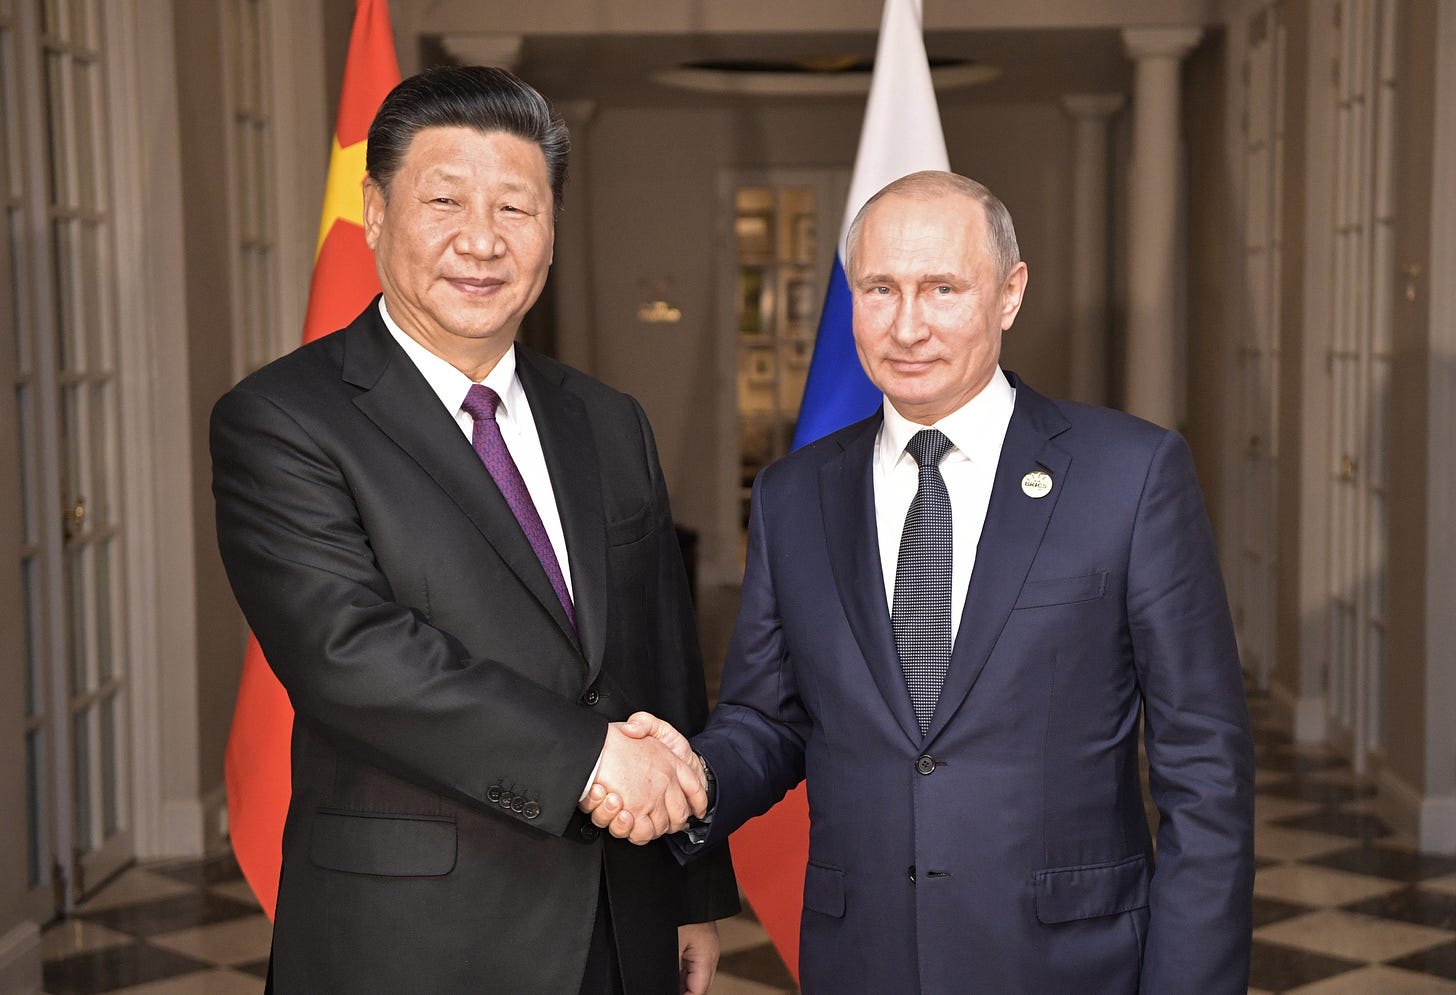 File:Vladimir Putin and Xi Jinping, 26 july 2018 (1).jpg - Wikimedia Commons